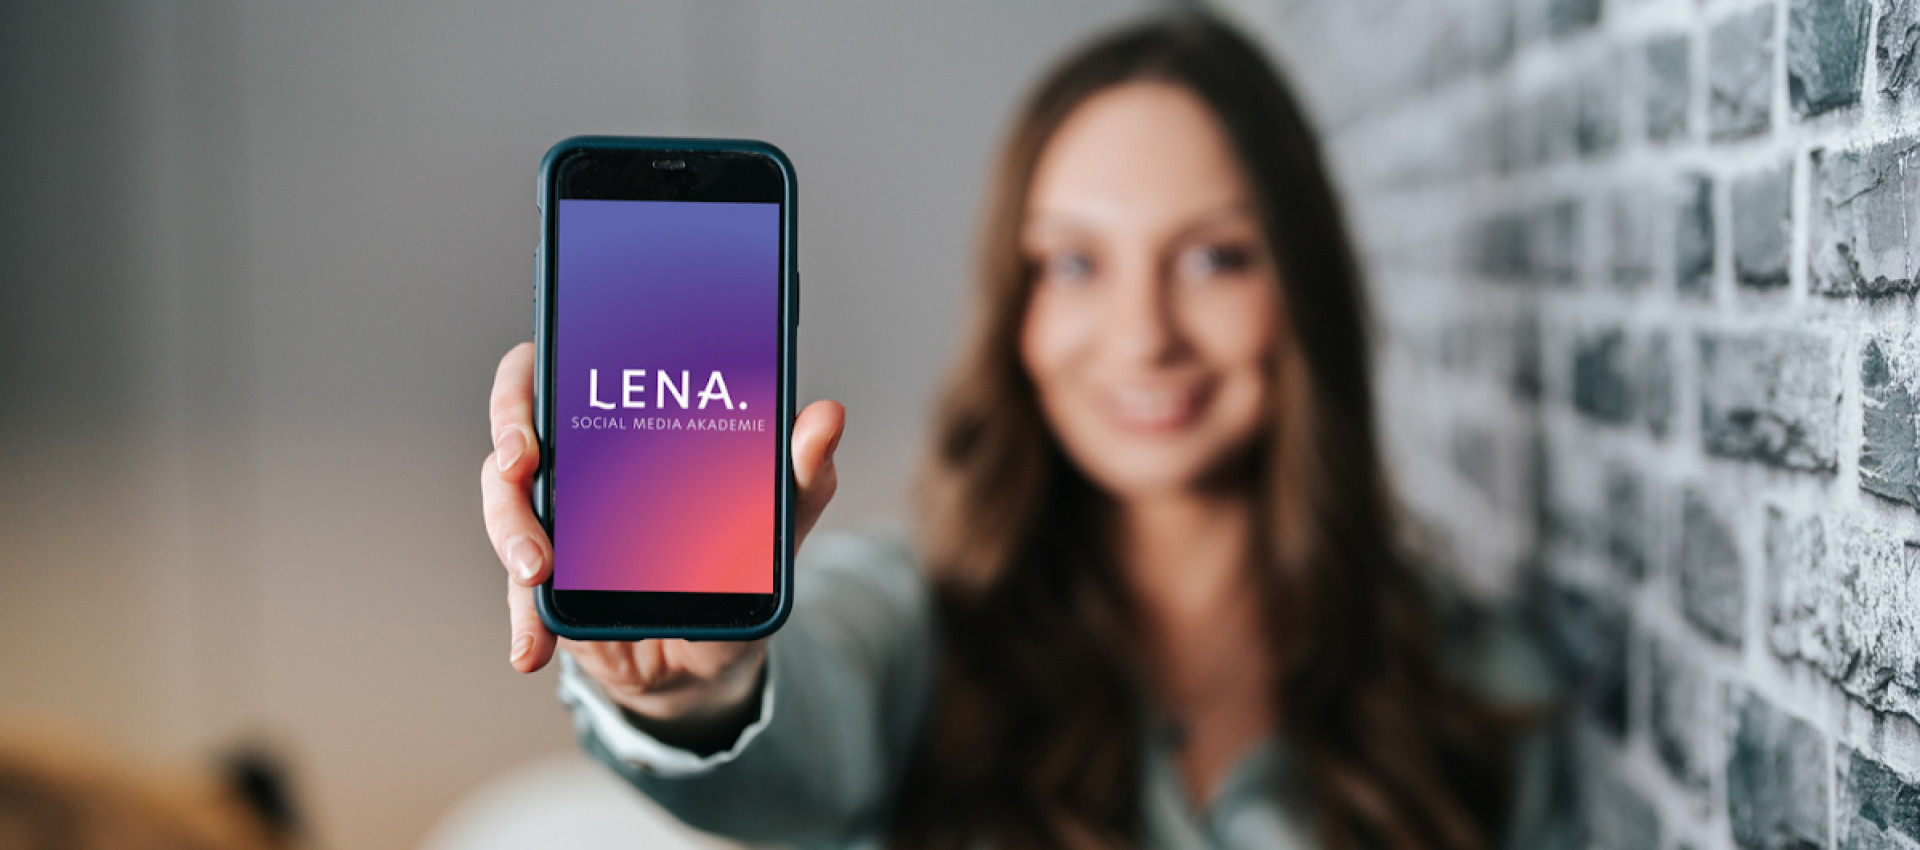 #RegioGespräch: Die Offenburger Social-Media “Sonne”: Lena Kempin, Inhaberin von LENA.